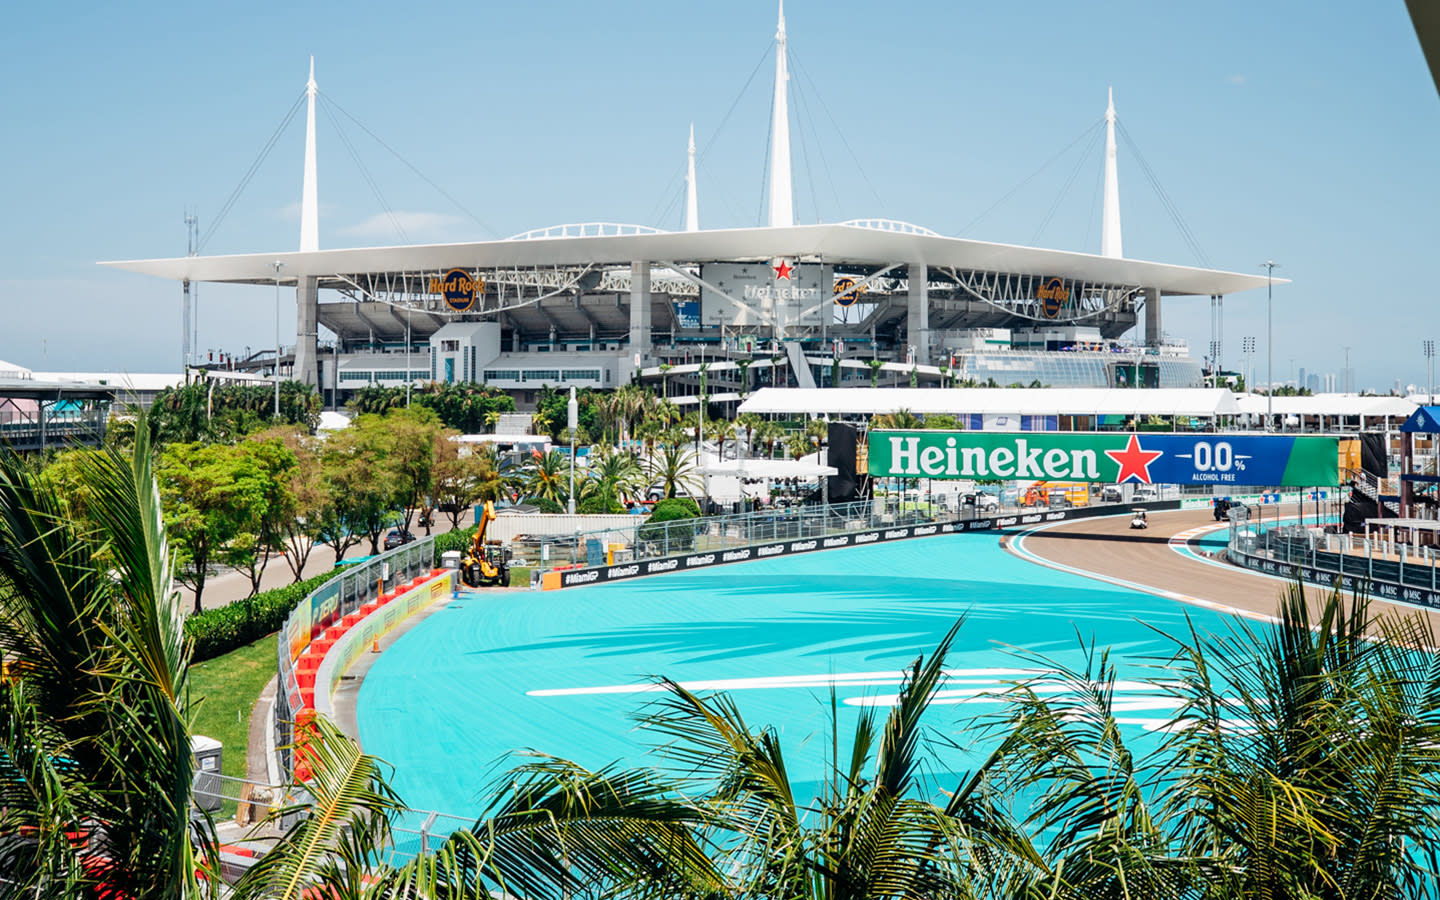 Miami F1 race sponsor Hard Rock to create man-made beach